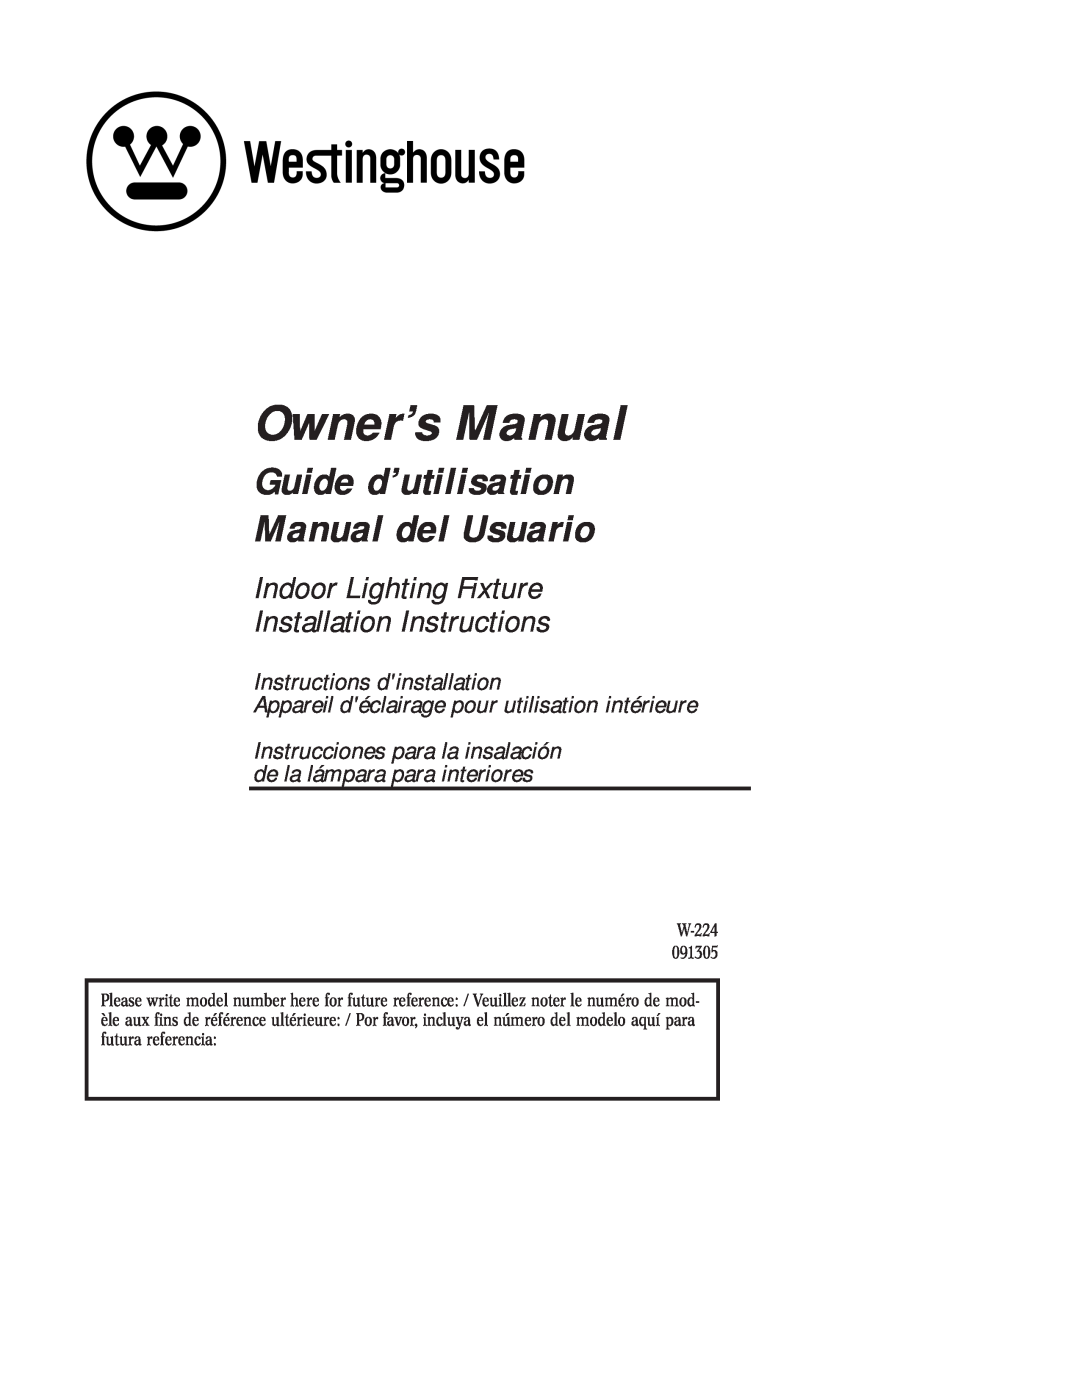 Westinghouse 91305 owner manual Guide d’utilisation Manual del Usuario, Indoor Lighting Fixture Installation Instructions 